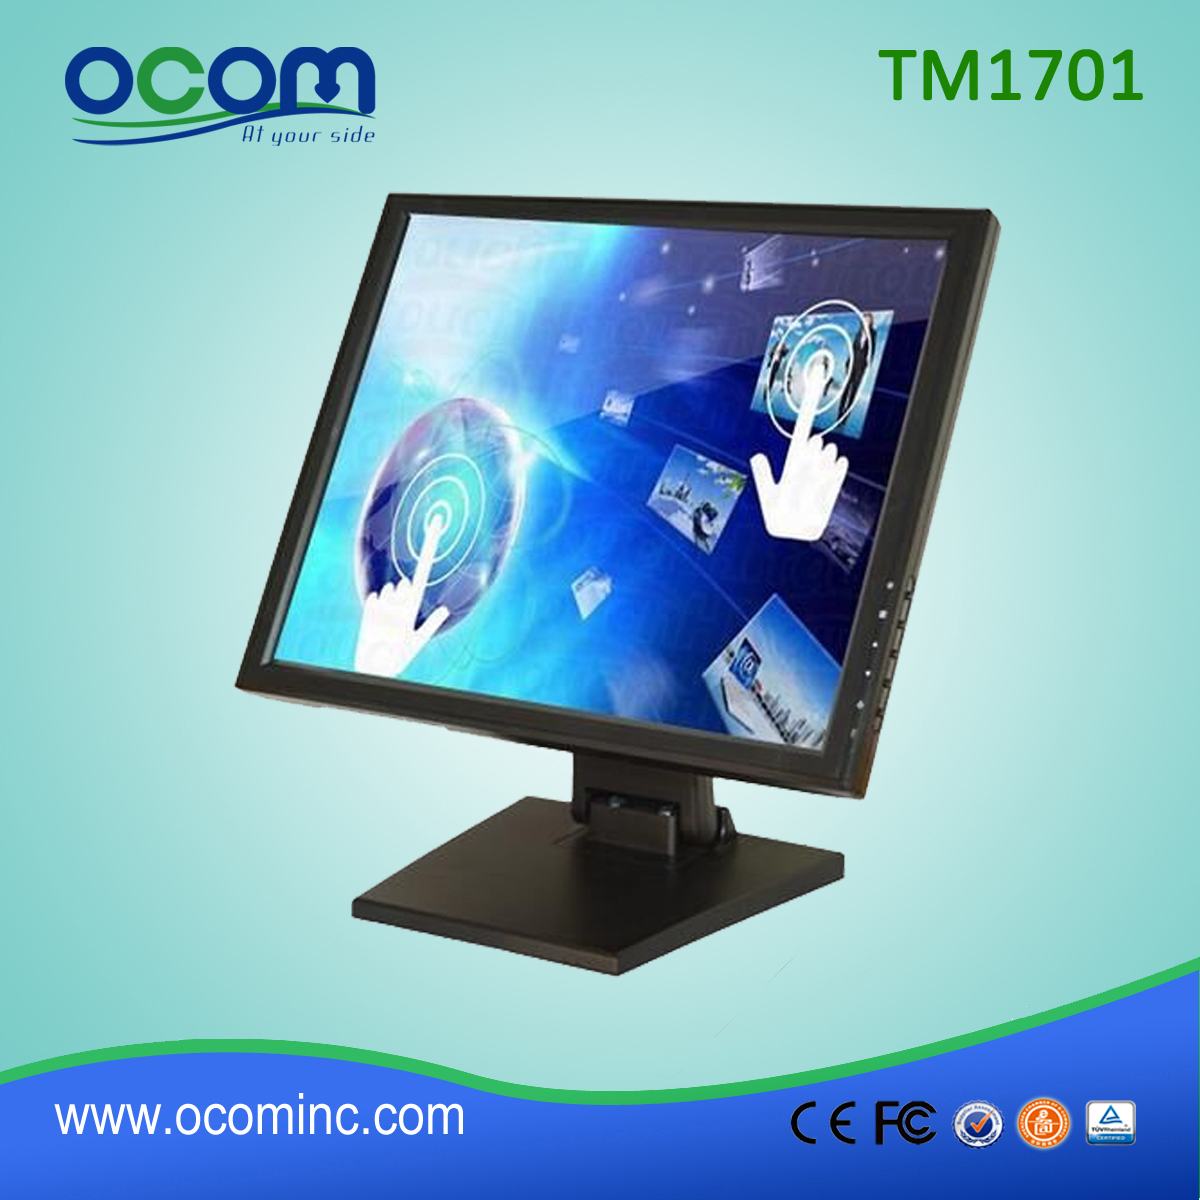 TM1701 impermeável monitor baratos Touch Screen de 17 polegadas